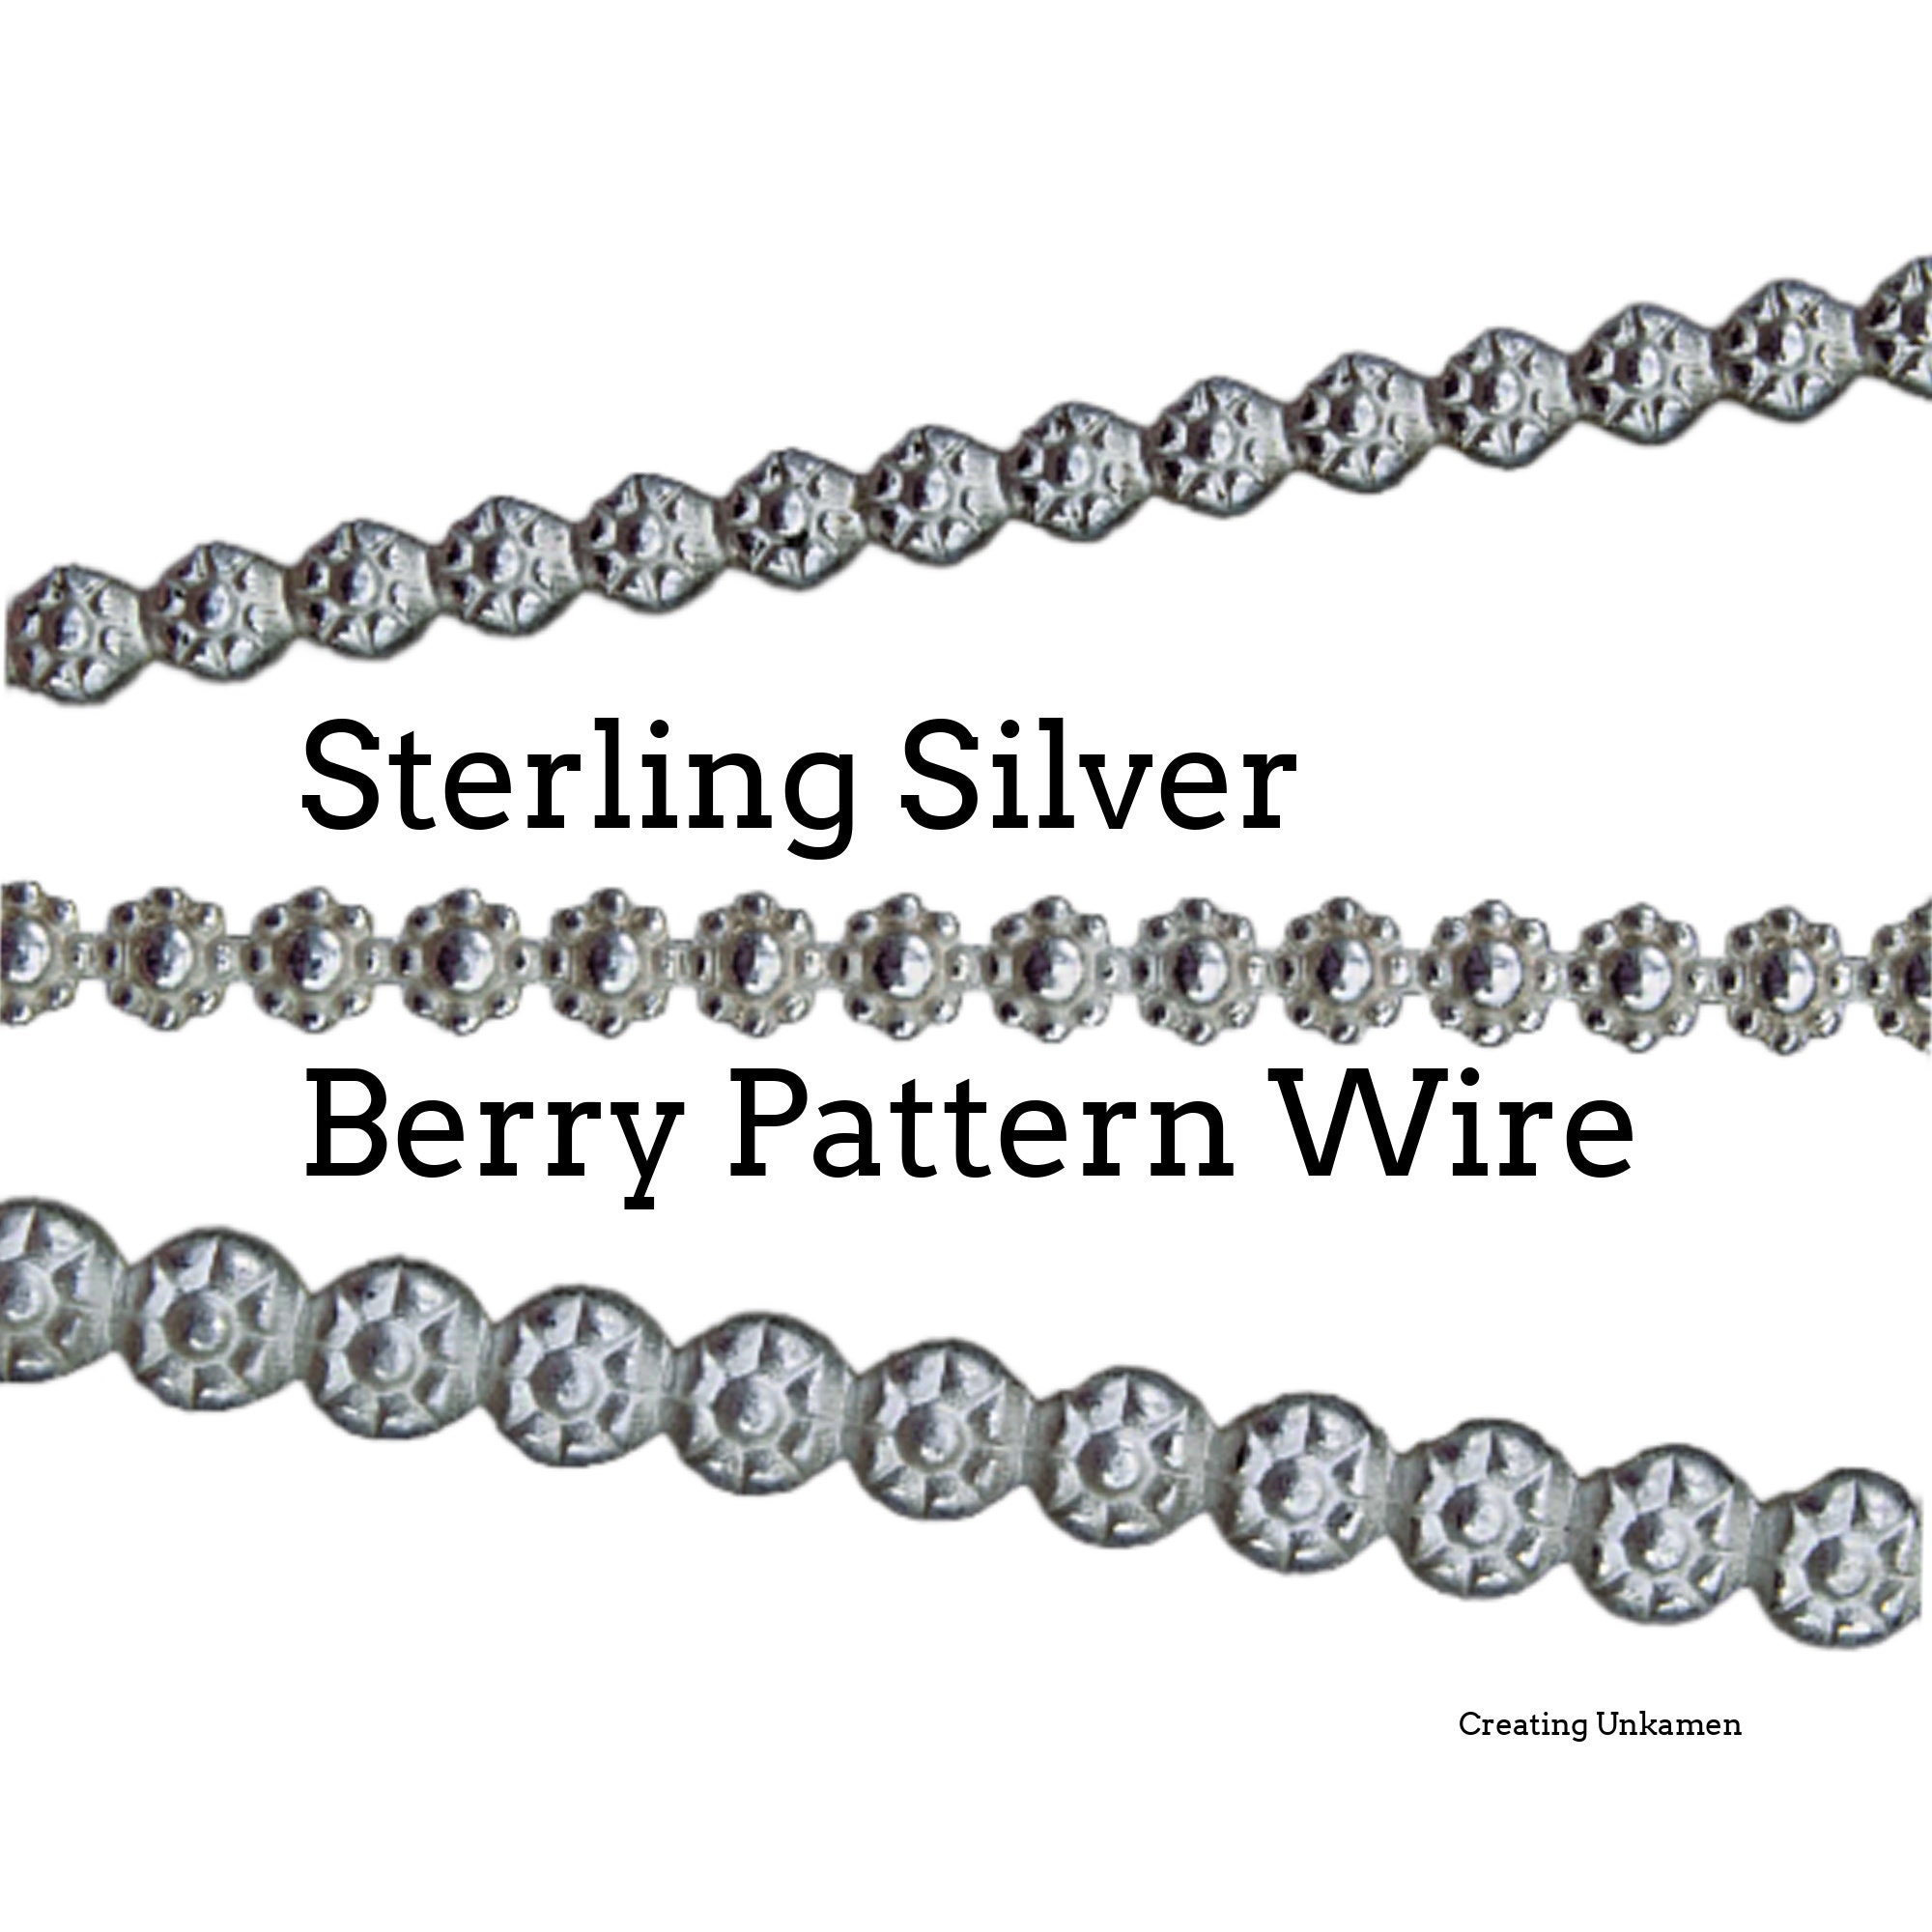 Sterling Silver Sheet Metal / Double Clad / Half Hard, 3 Inch X 1 Inch  Width/ 12 30 Gauge / 925 Sterling Silver Sheets 